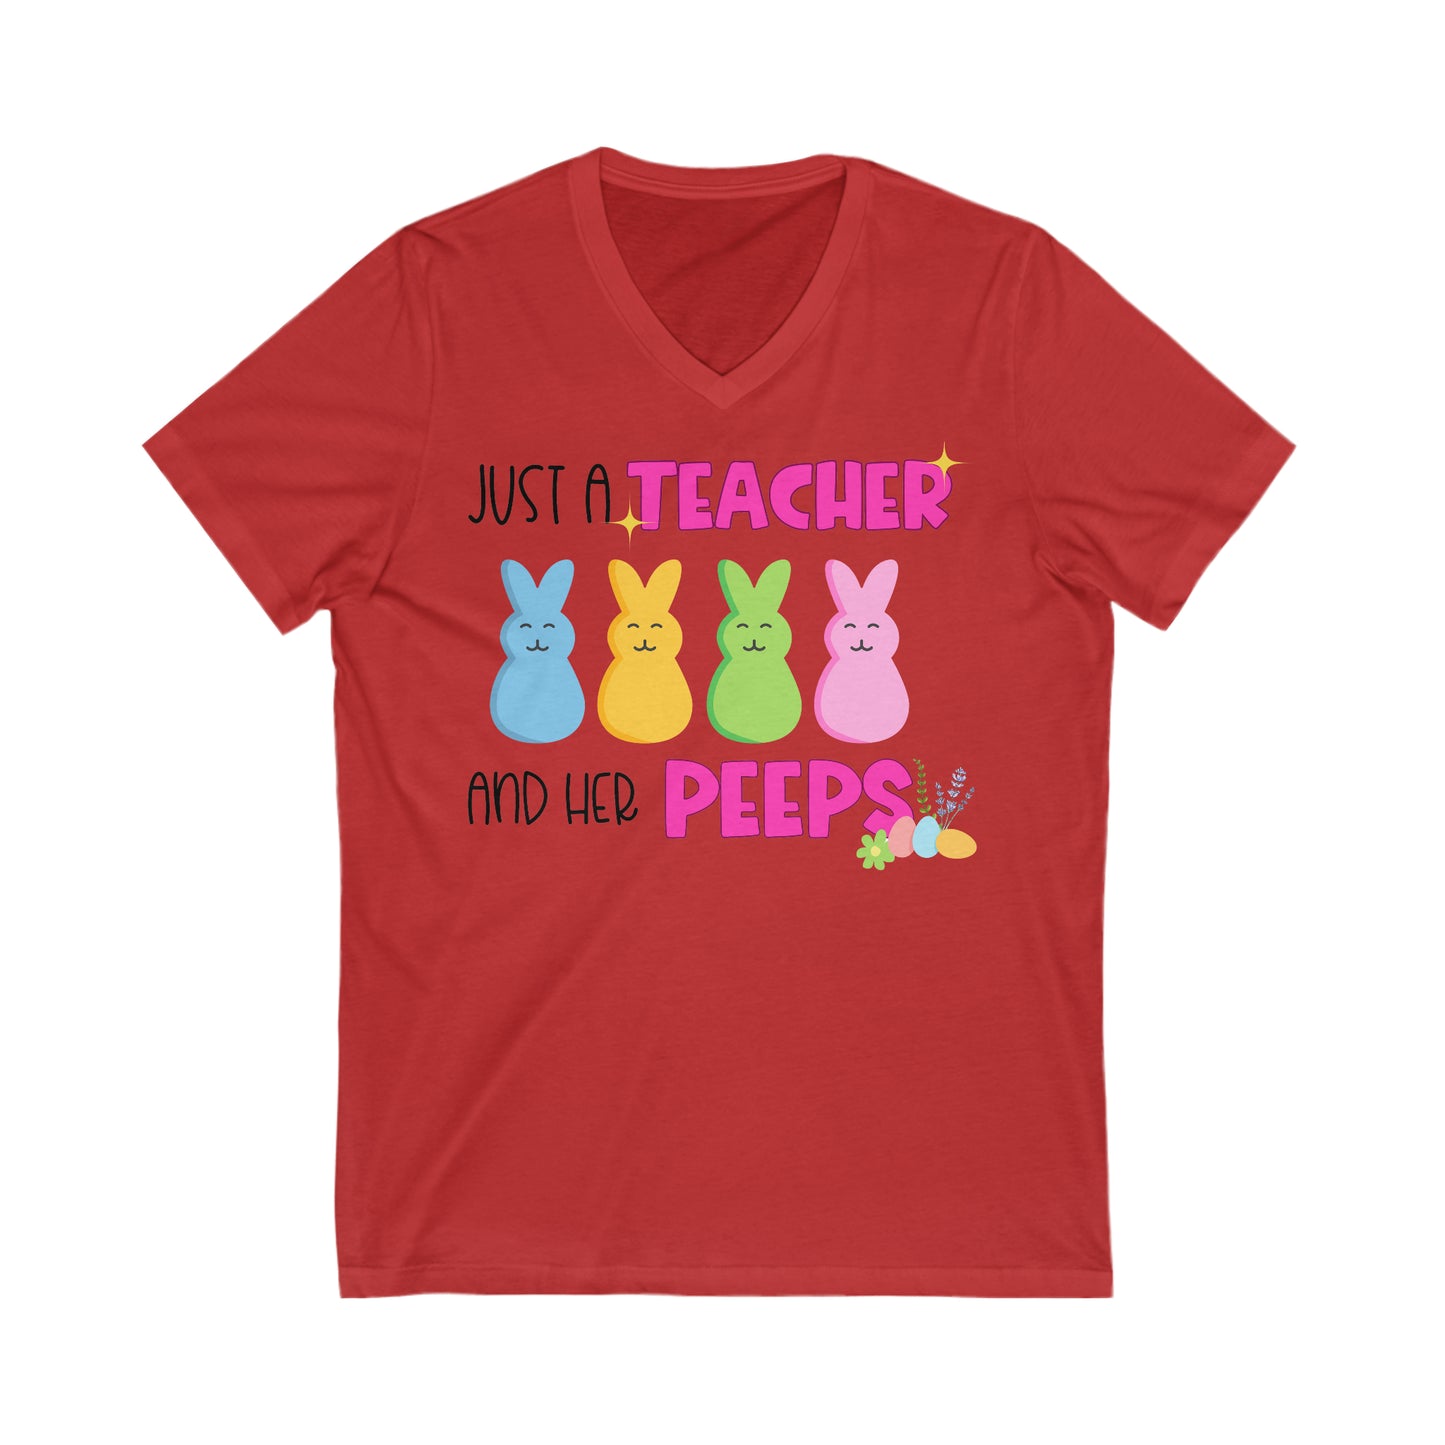 Just a Teacher and Her Peeps - Unisex Jersey Short Sleeve V-Neck Tee